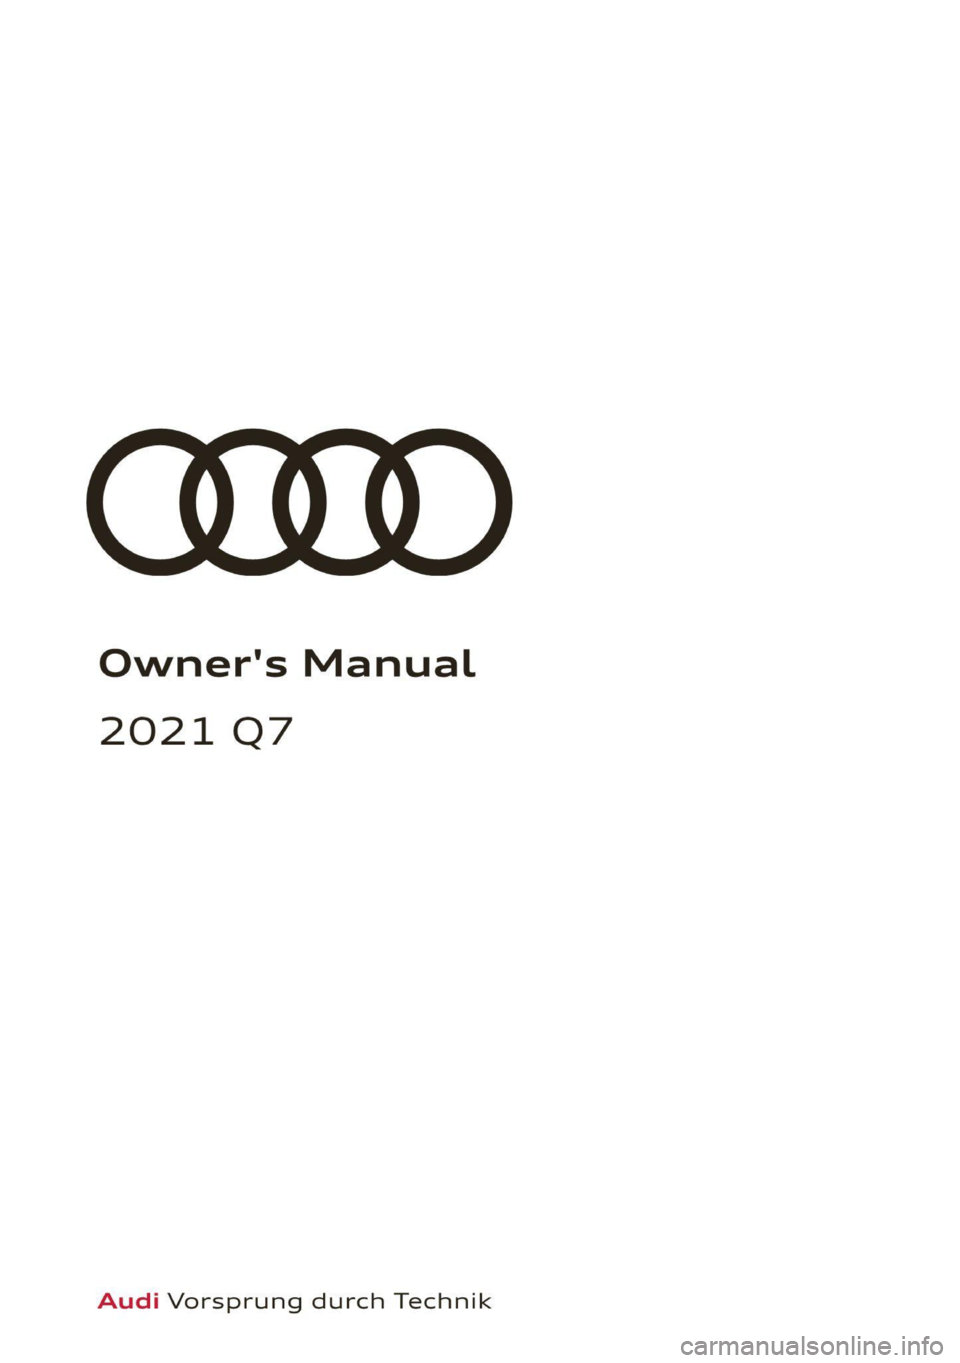 AUDI Q7 2021  Owner´s Manual Owner's Manual 
2021 Q7 
Audi Vorsprung durch Technik  